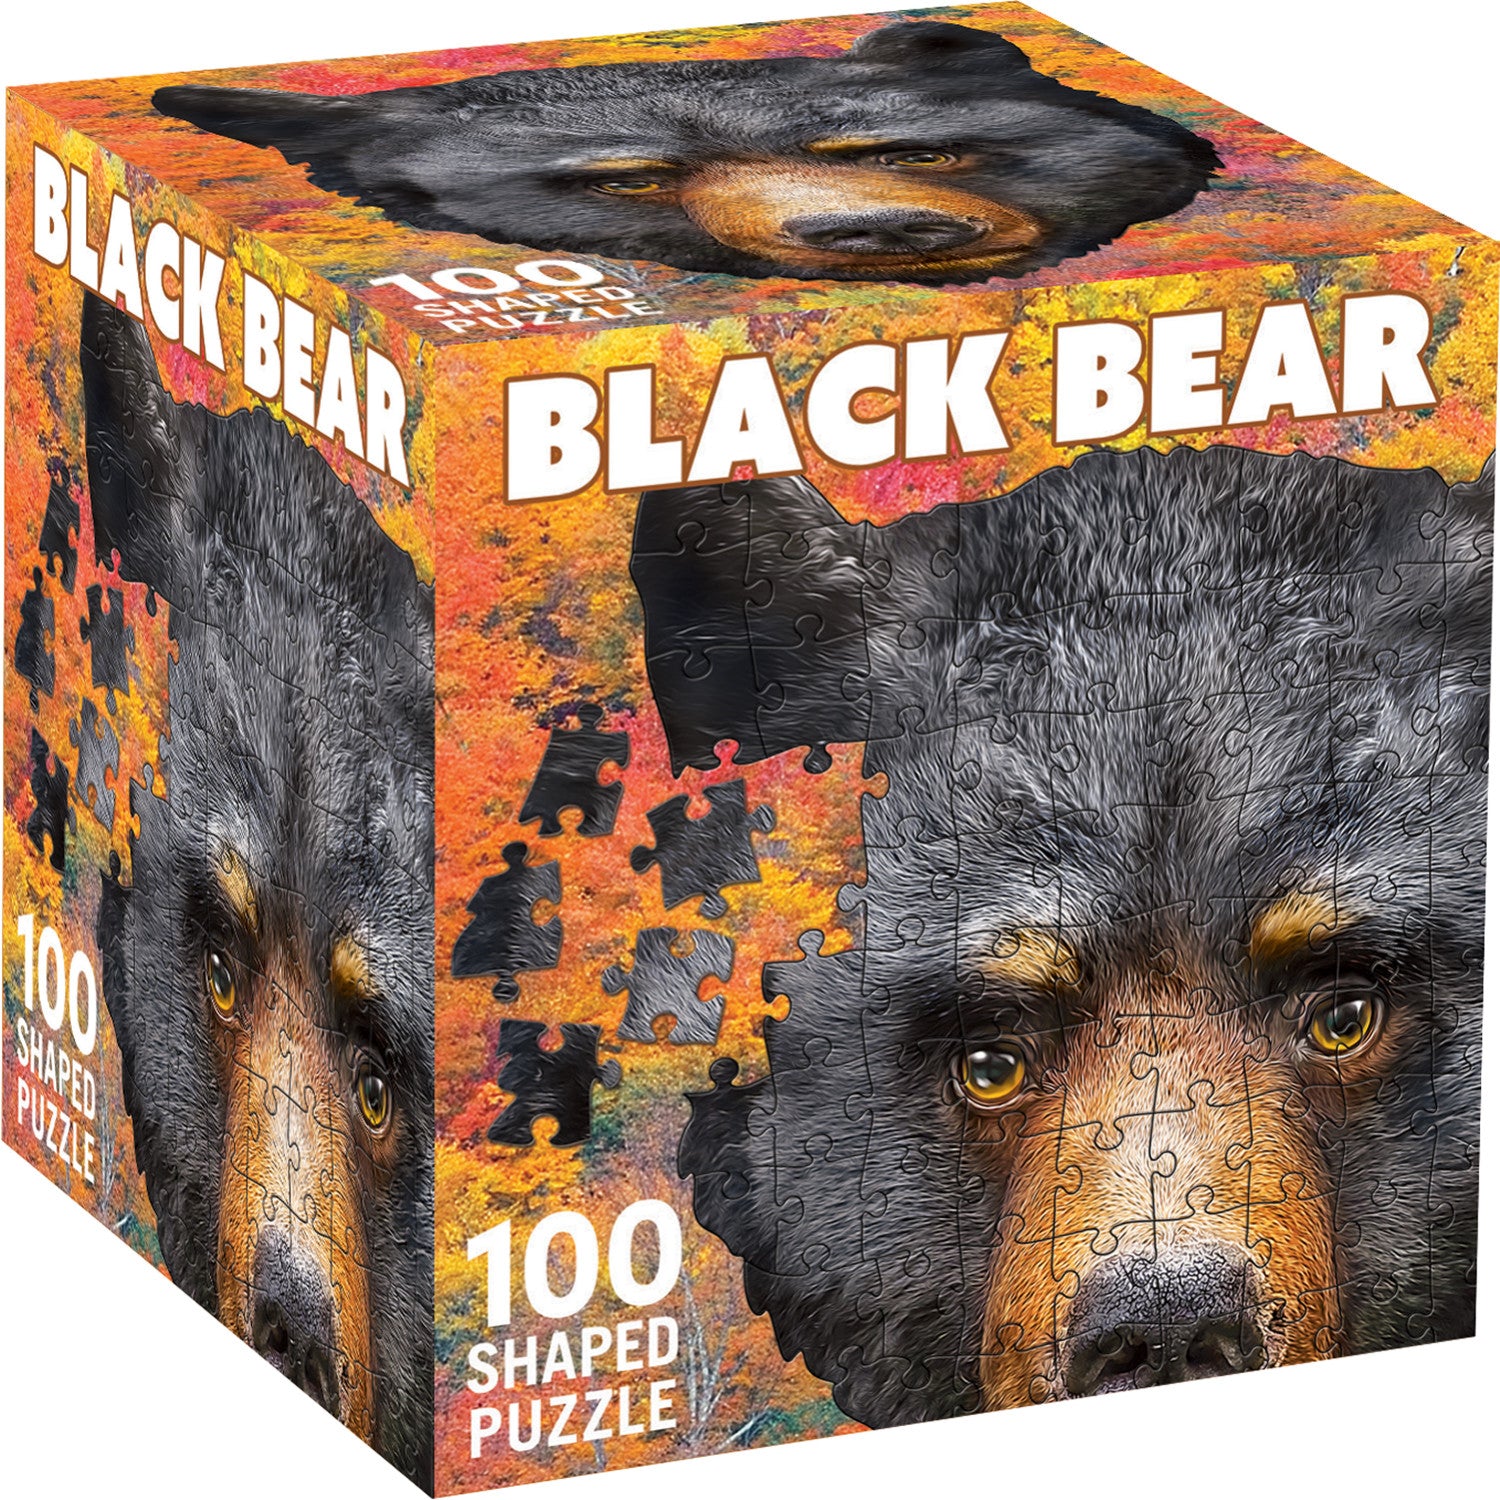 Black Bear 100 Piece Shaped Jigsaw Puzzle